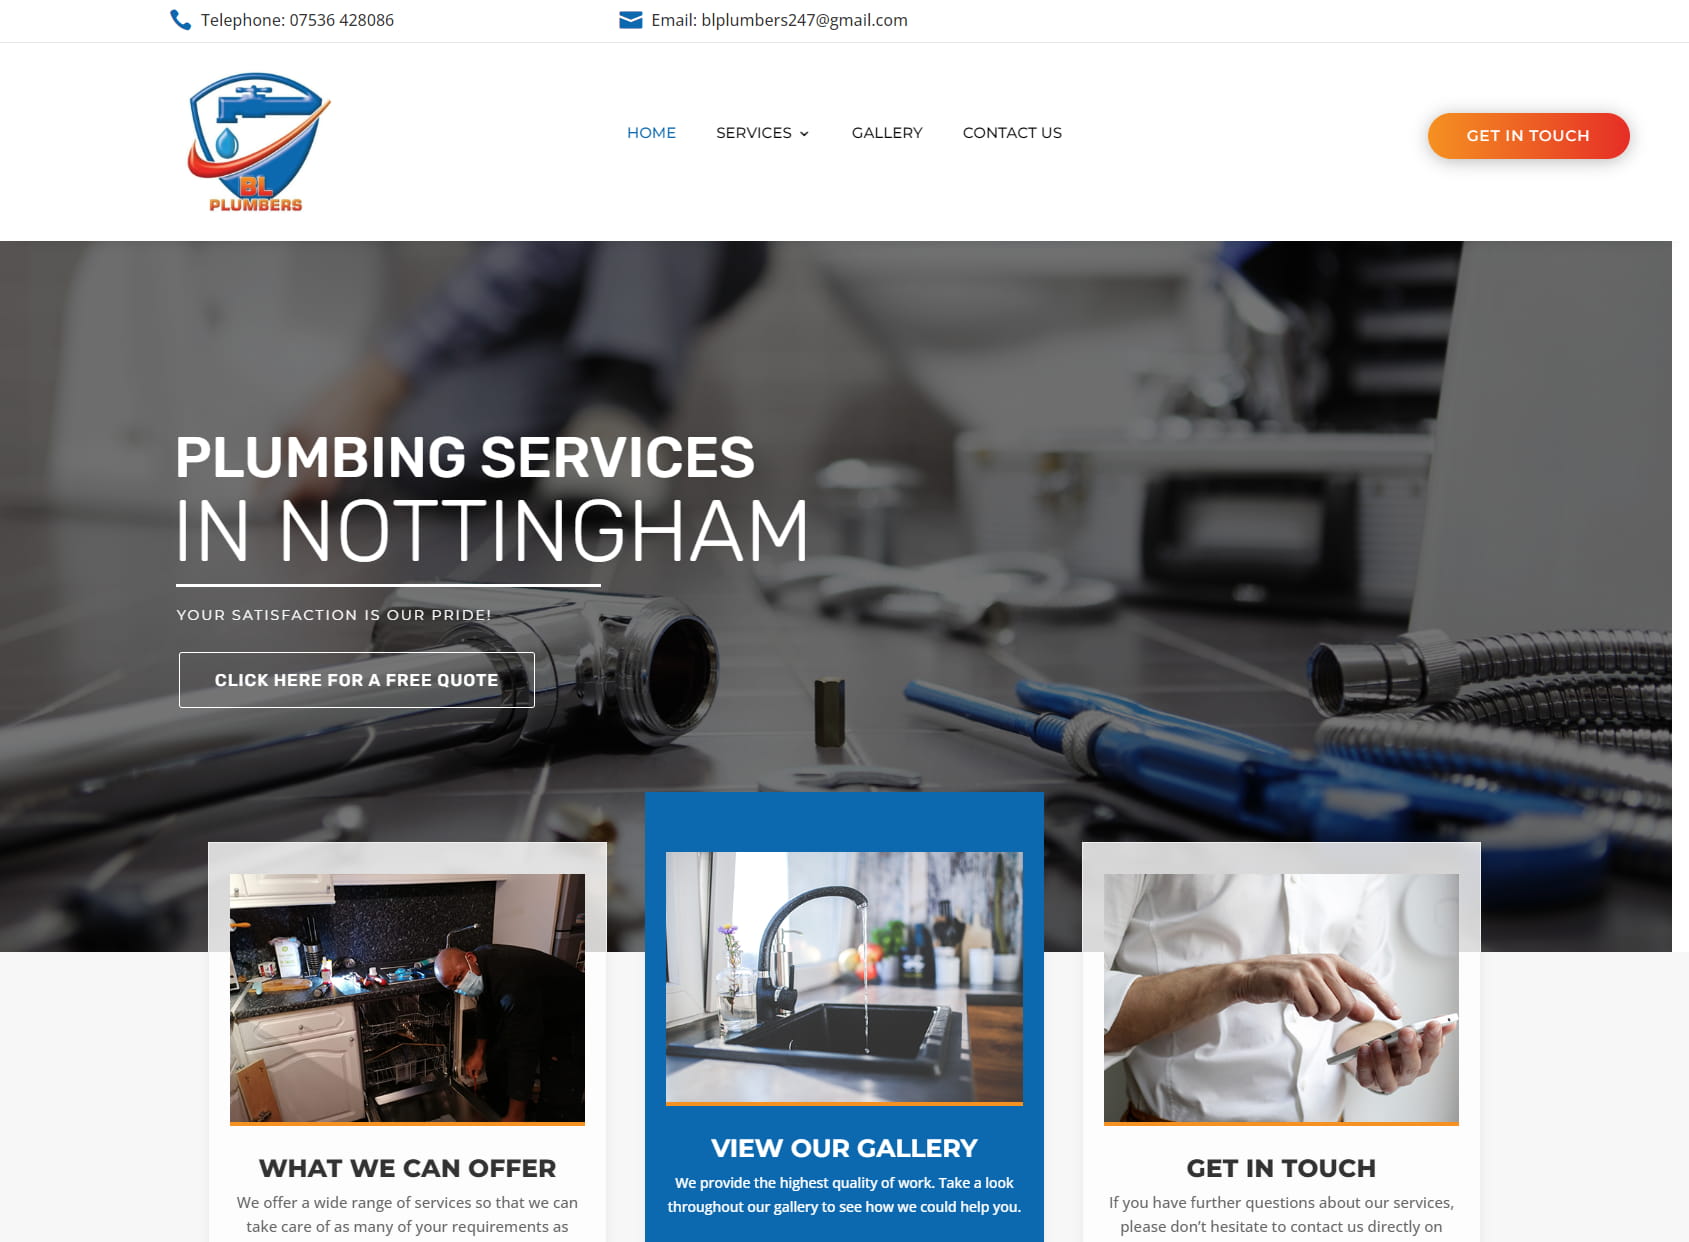 BL Plumbers Nottingham Ltd